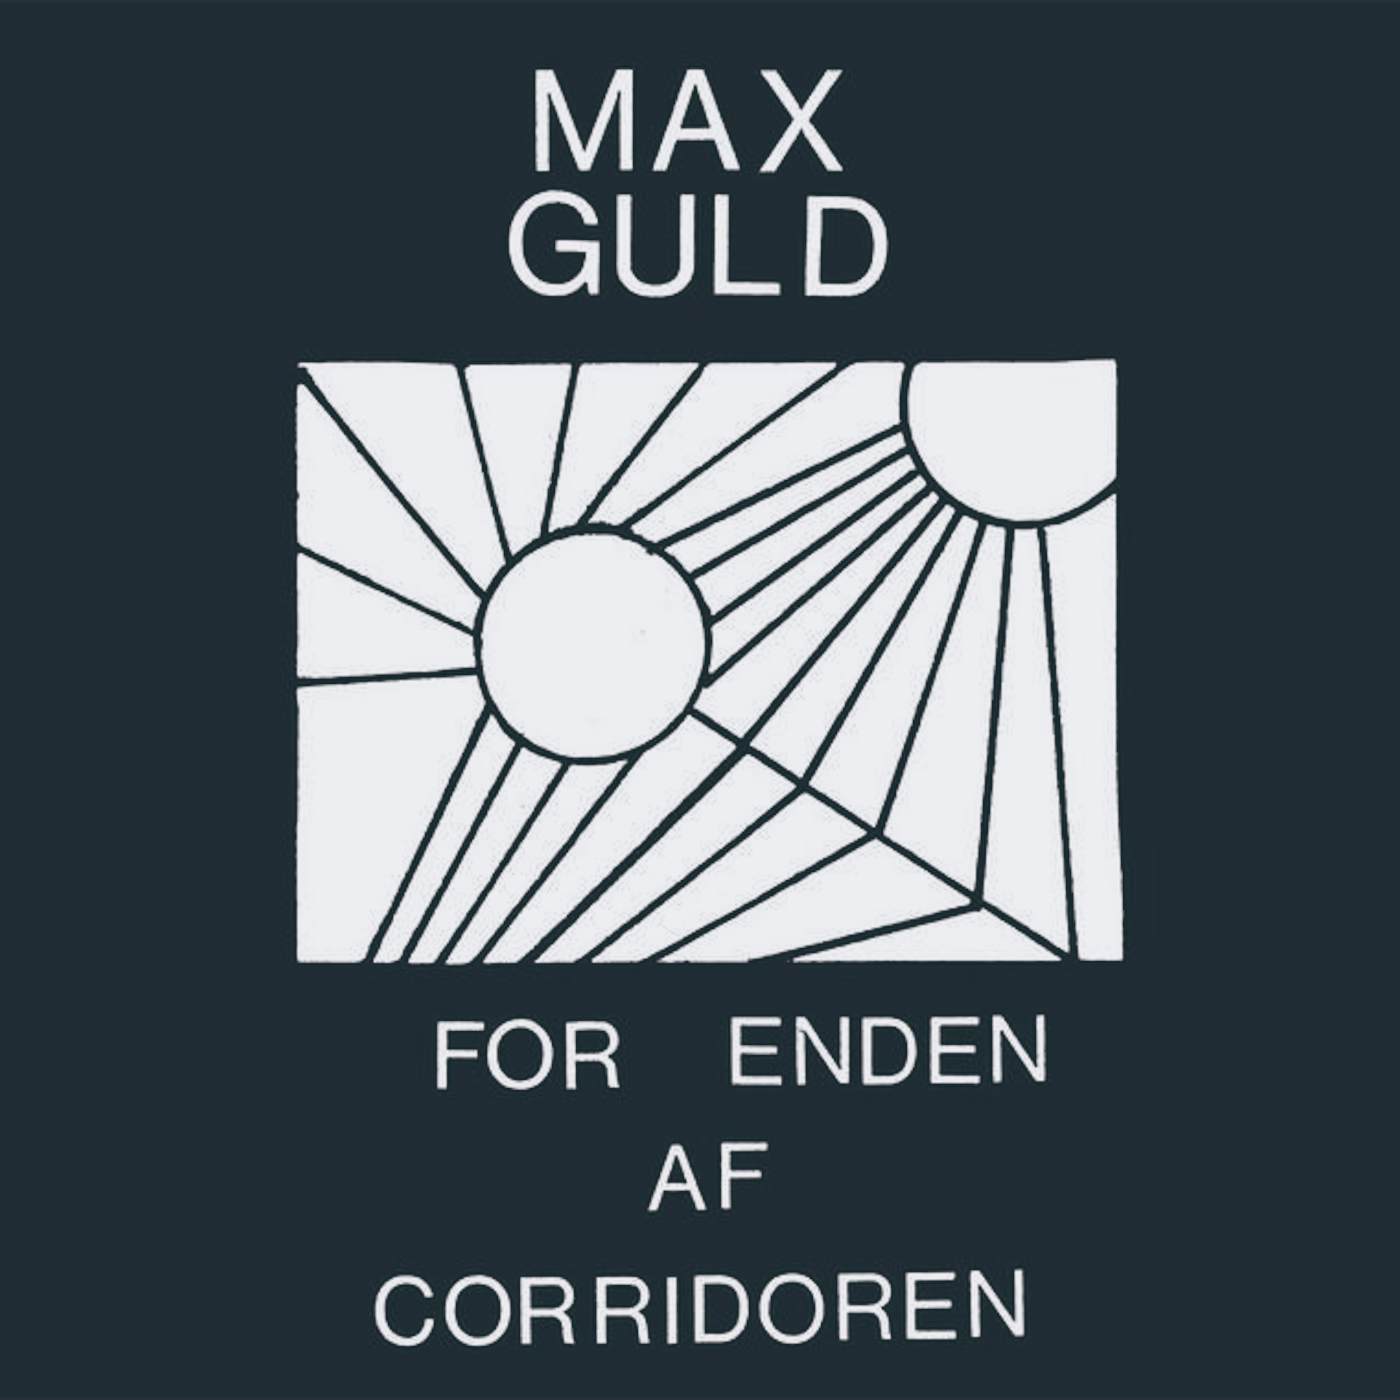 Max Guld